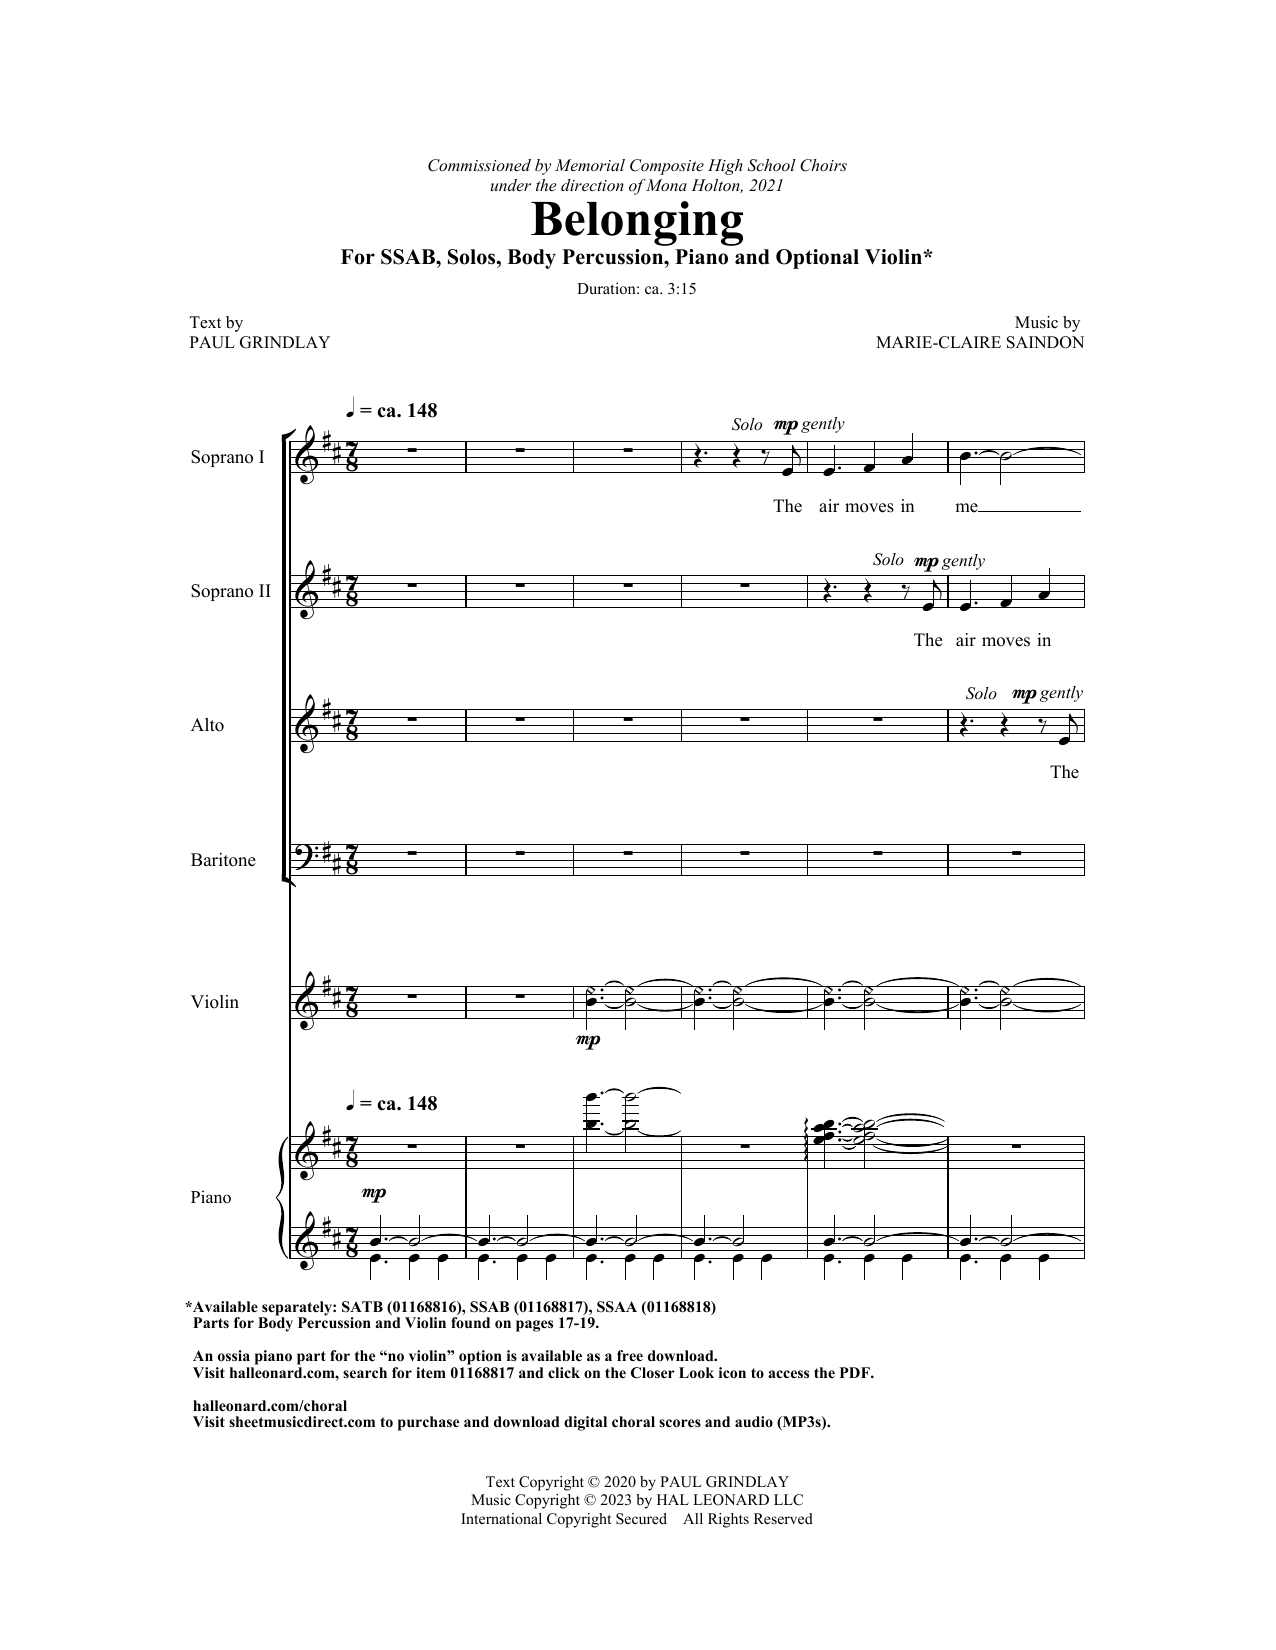 Marie-Clairé Saindon Belonging sheet music notes and chords arranged for SATB Choir